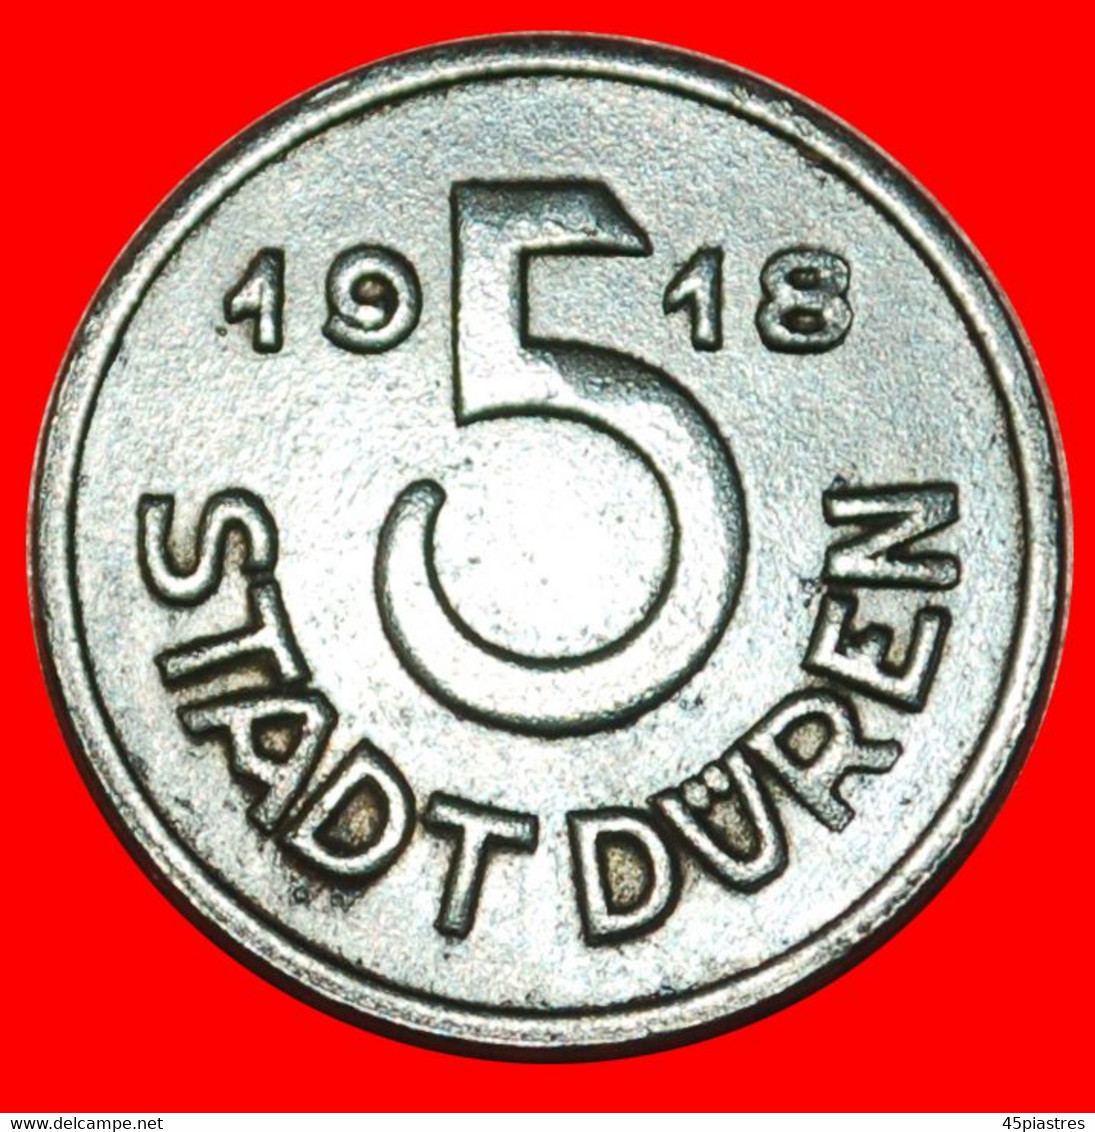 * IRON LUEDENSCHEID: GERMANY DUEREN ★ 5 PFENNIGS 1918! TO BE PUBLISHED! LOW START! ★ NO RESERVE! - Monetary/Of Necessity